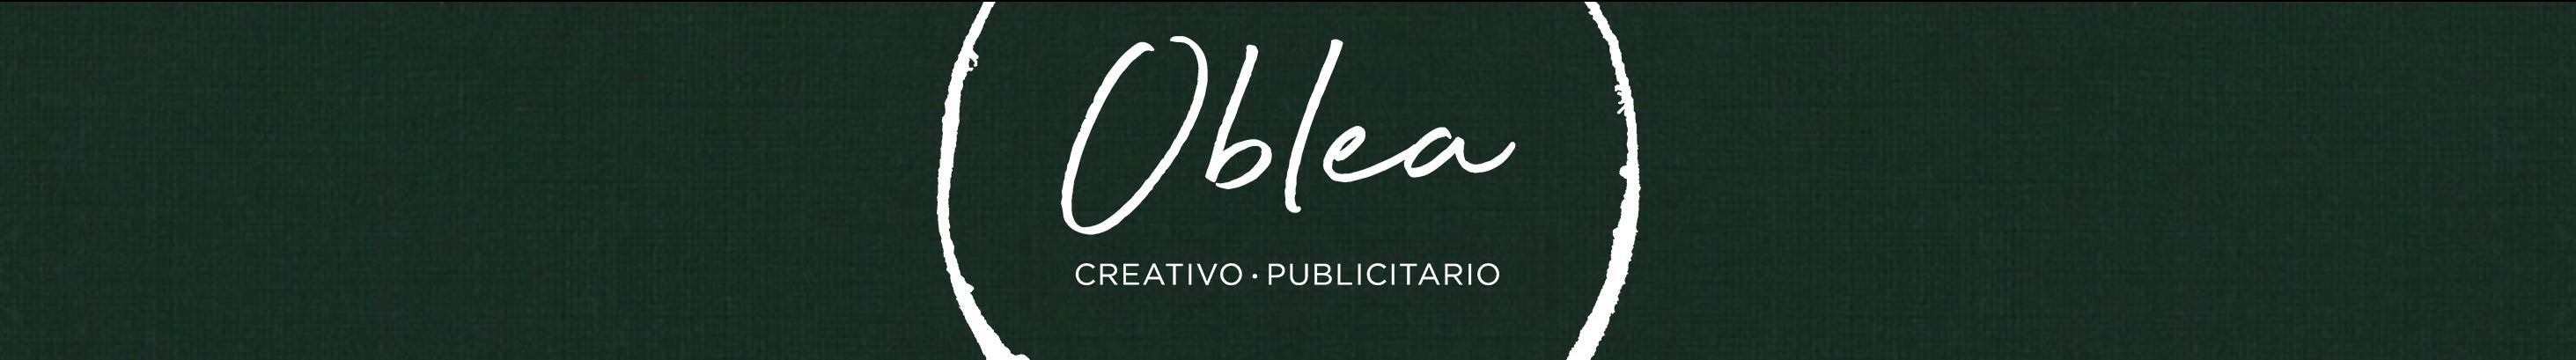 Miguel Angel Oblea's profile banner